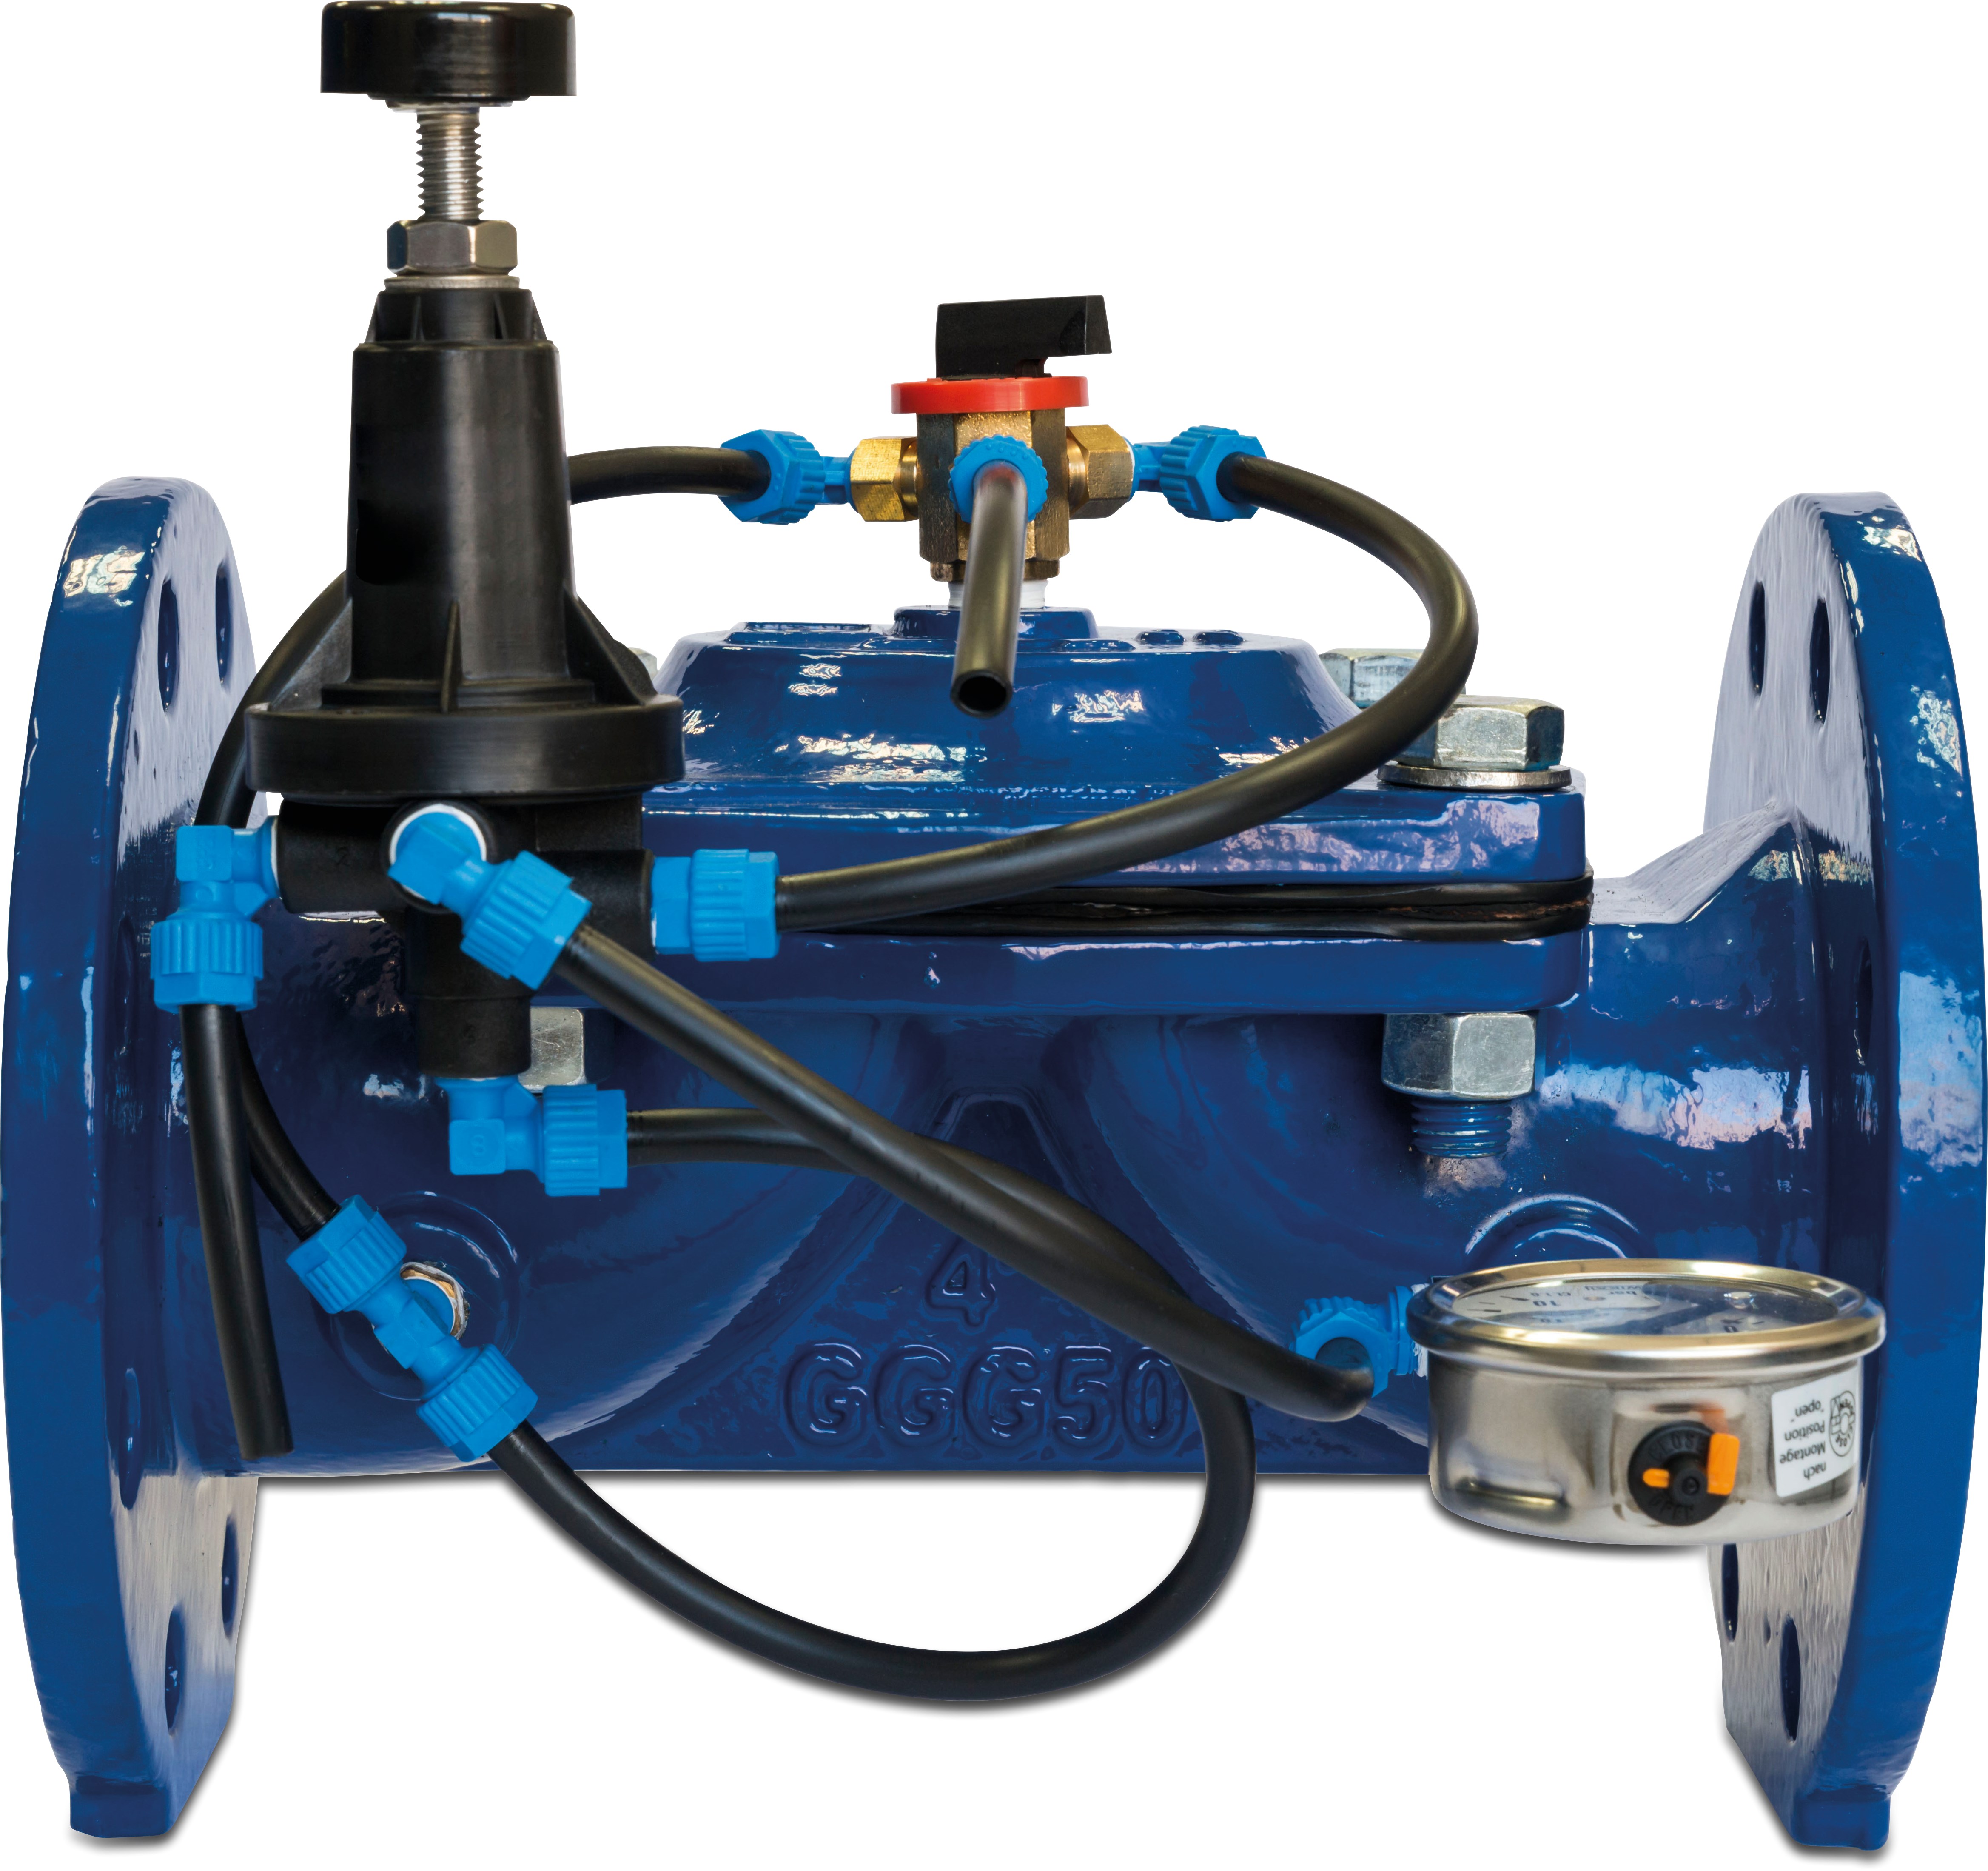 Azud Pressure reducing hydraulic valve cast iron GG 25 epoxy coating 2" female thread blue type FT-P.P